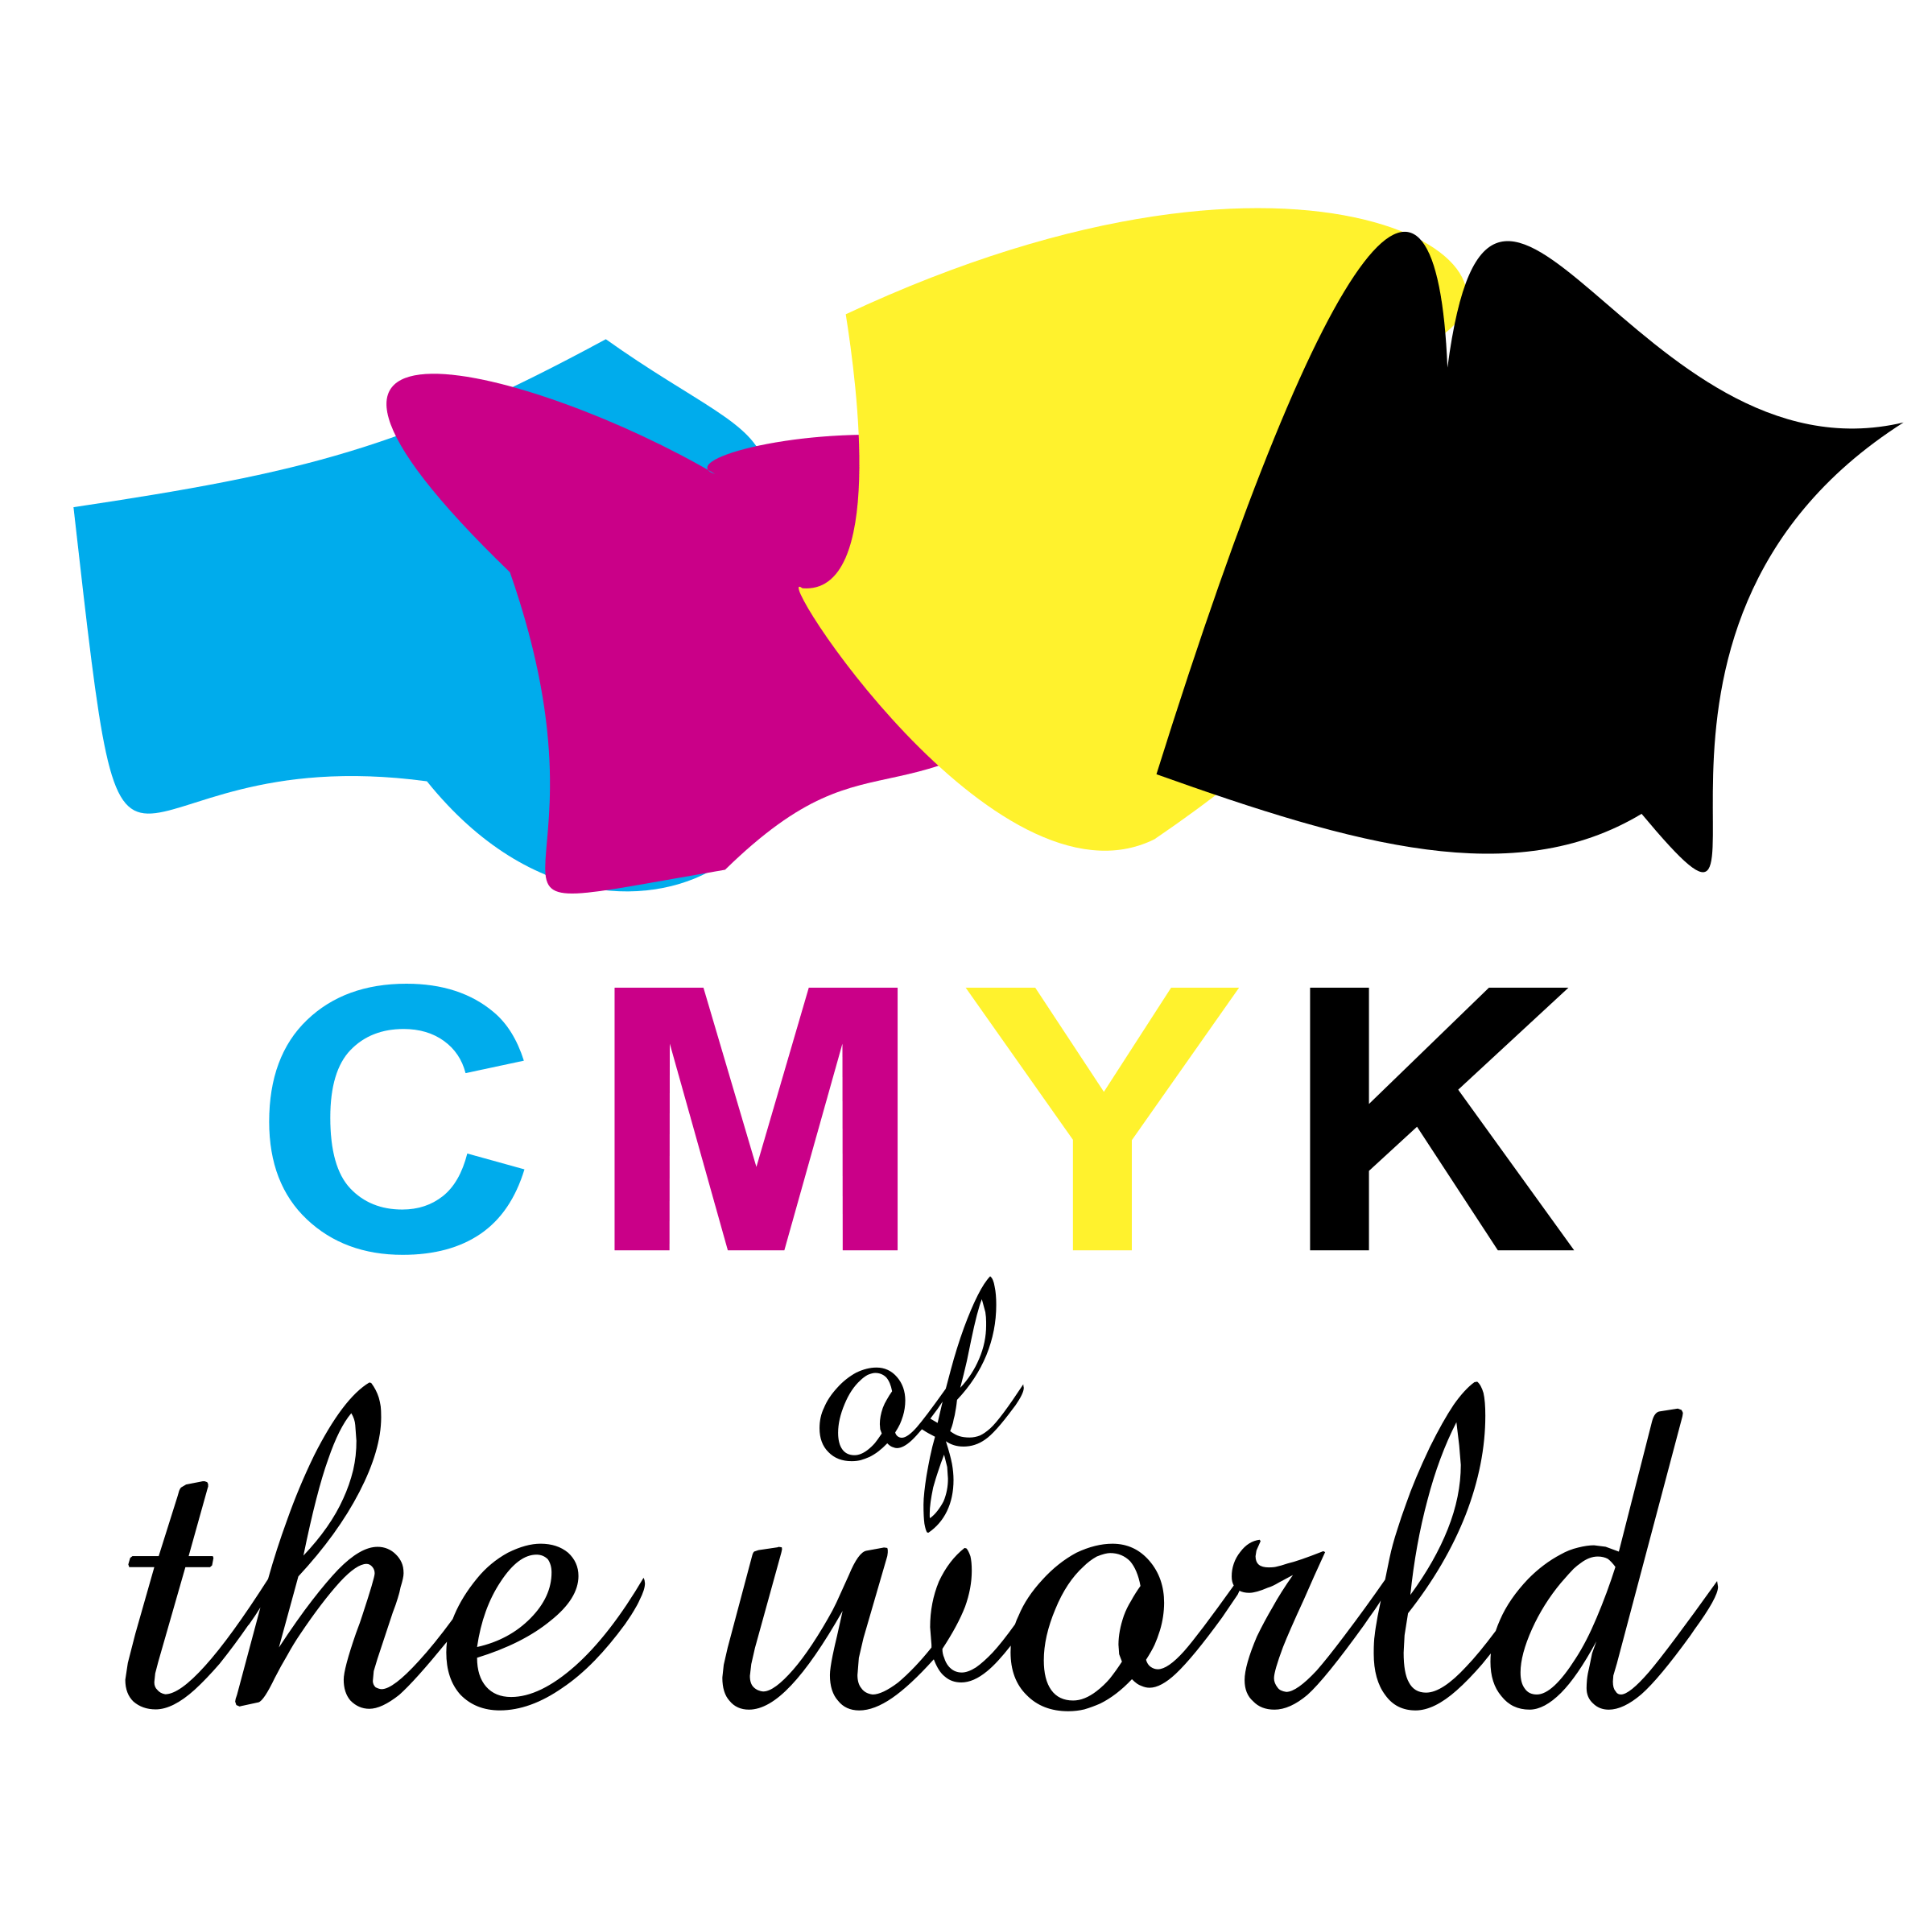 CMYK Logo - CMYK of the world Logo PNG Transparent & SVG Vector - Freebie Supply